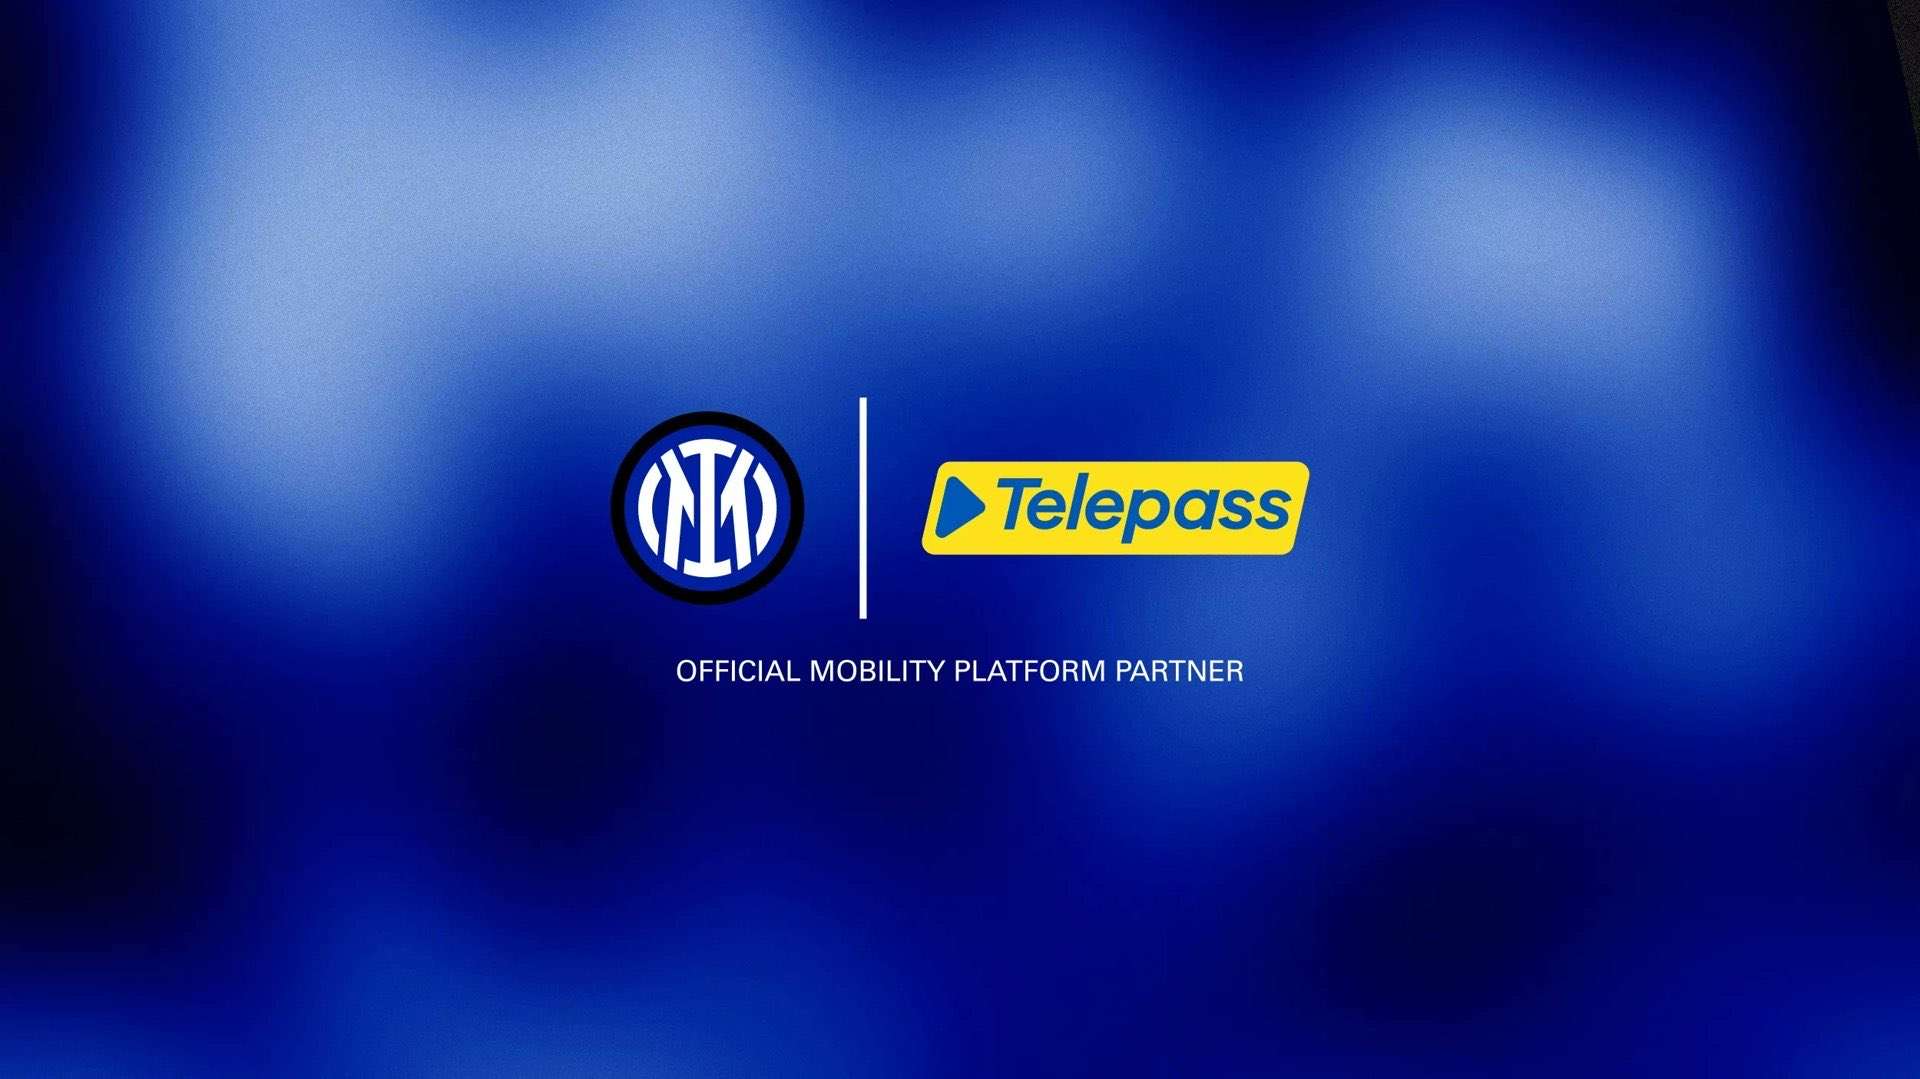 inter telepass partnership